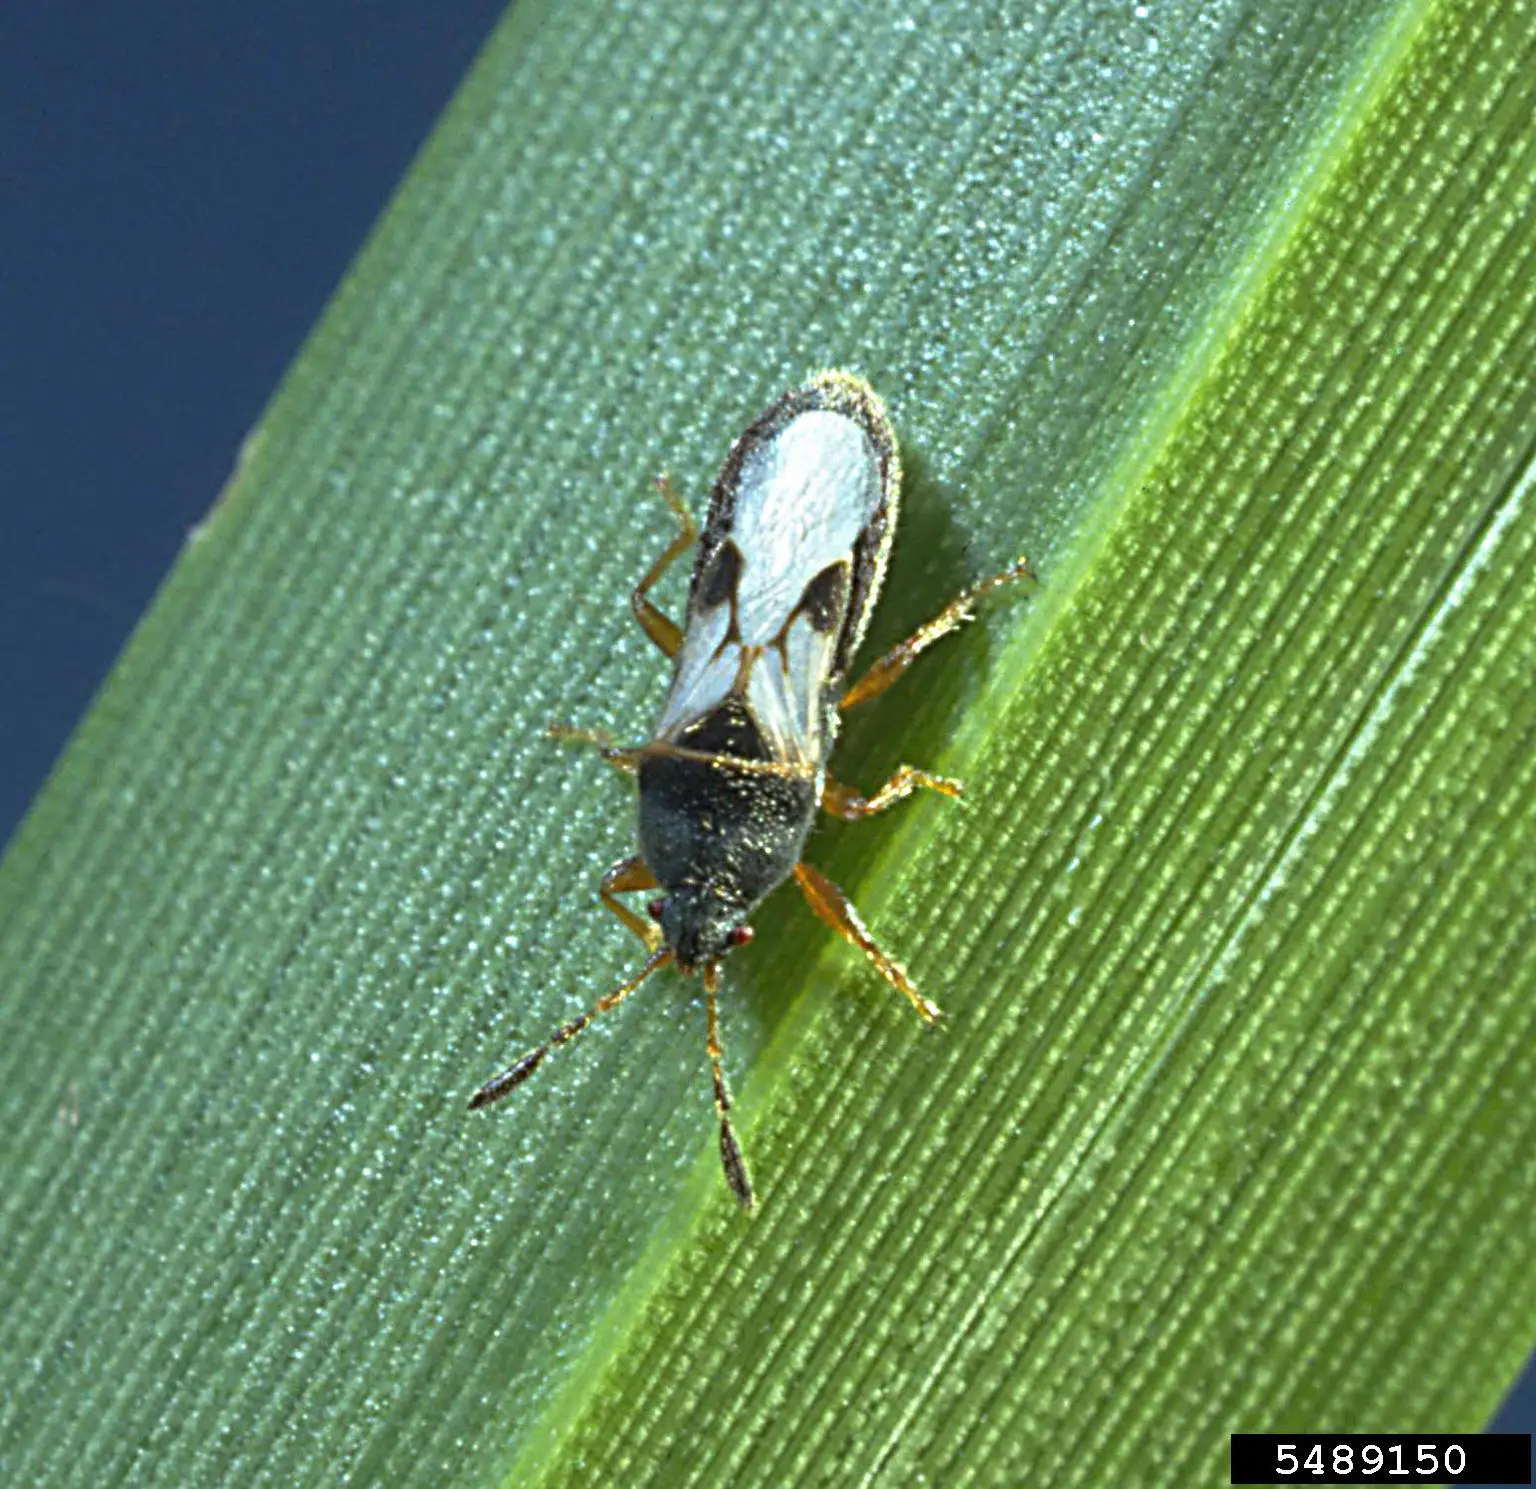 southern chinch bug, Blissus insularis (Hemiptera: Blissidae)